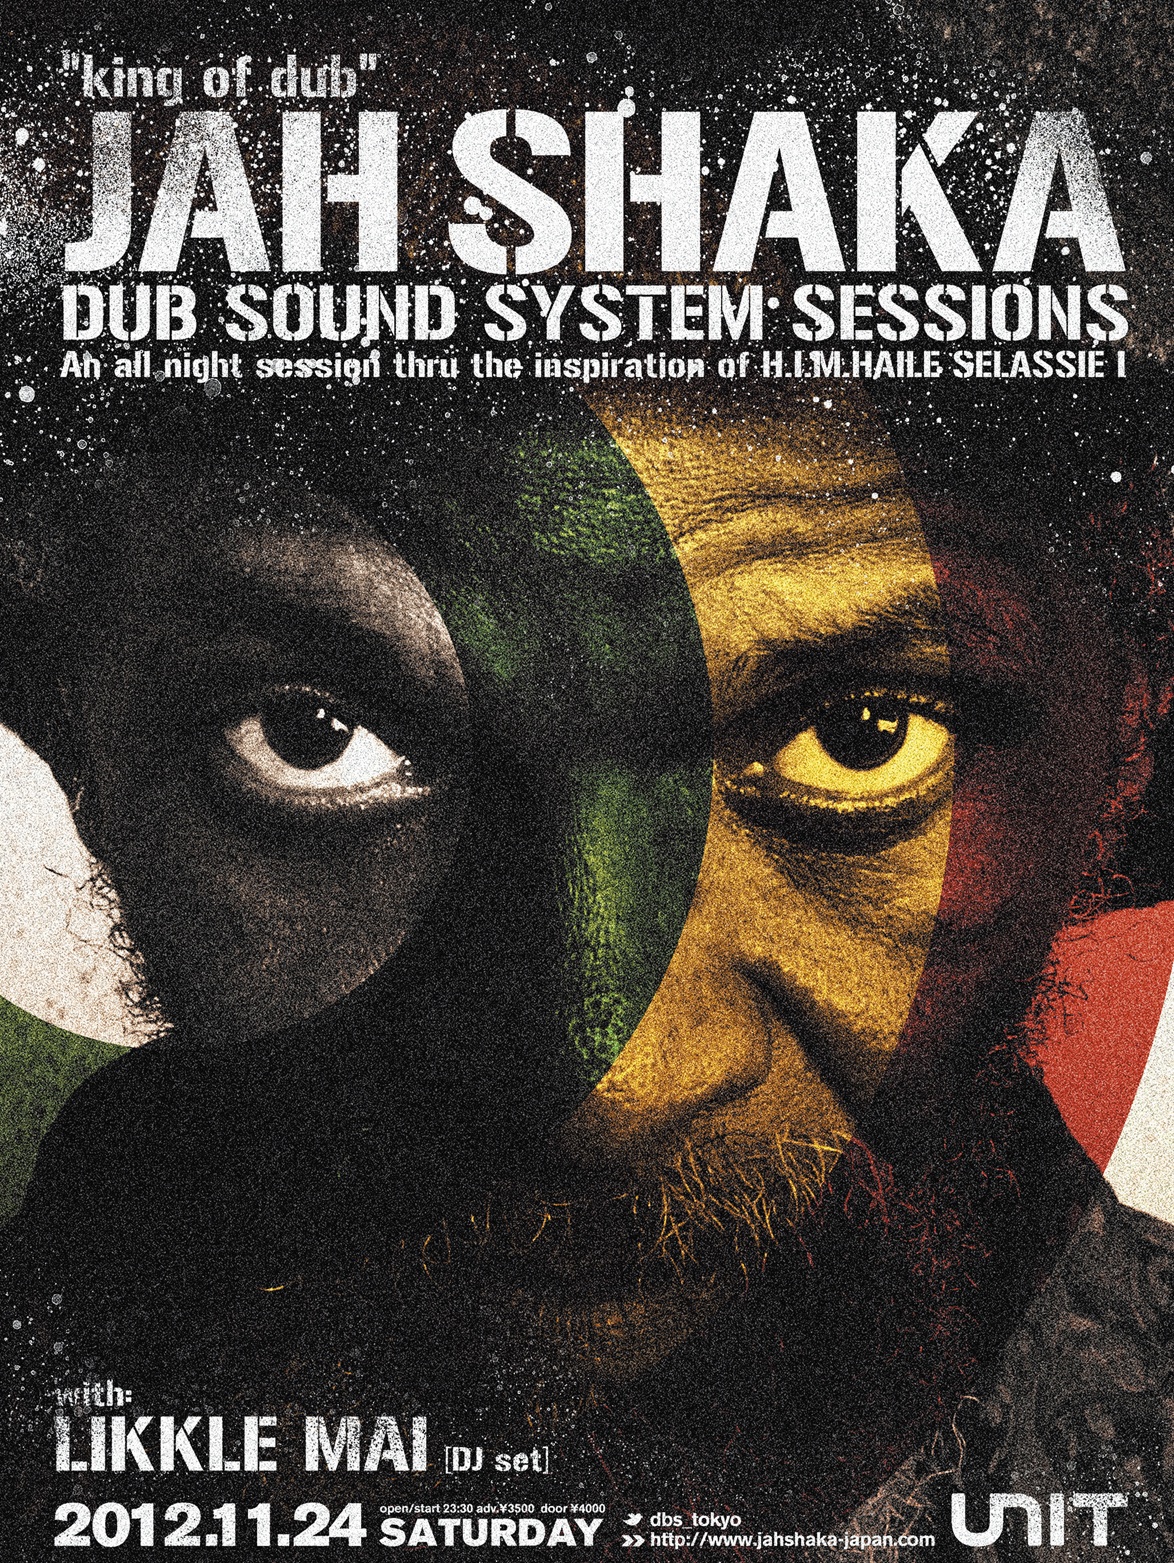 Jah Rastafari ! ! ! from kadota